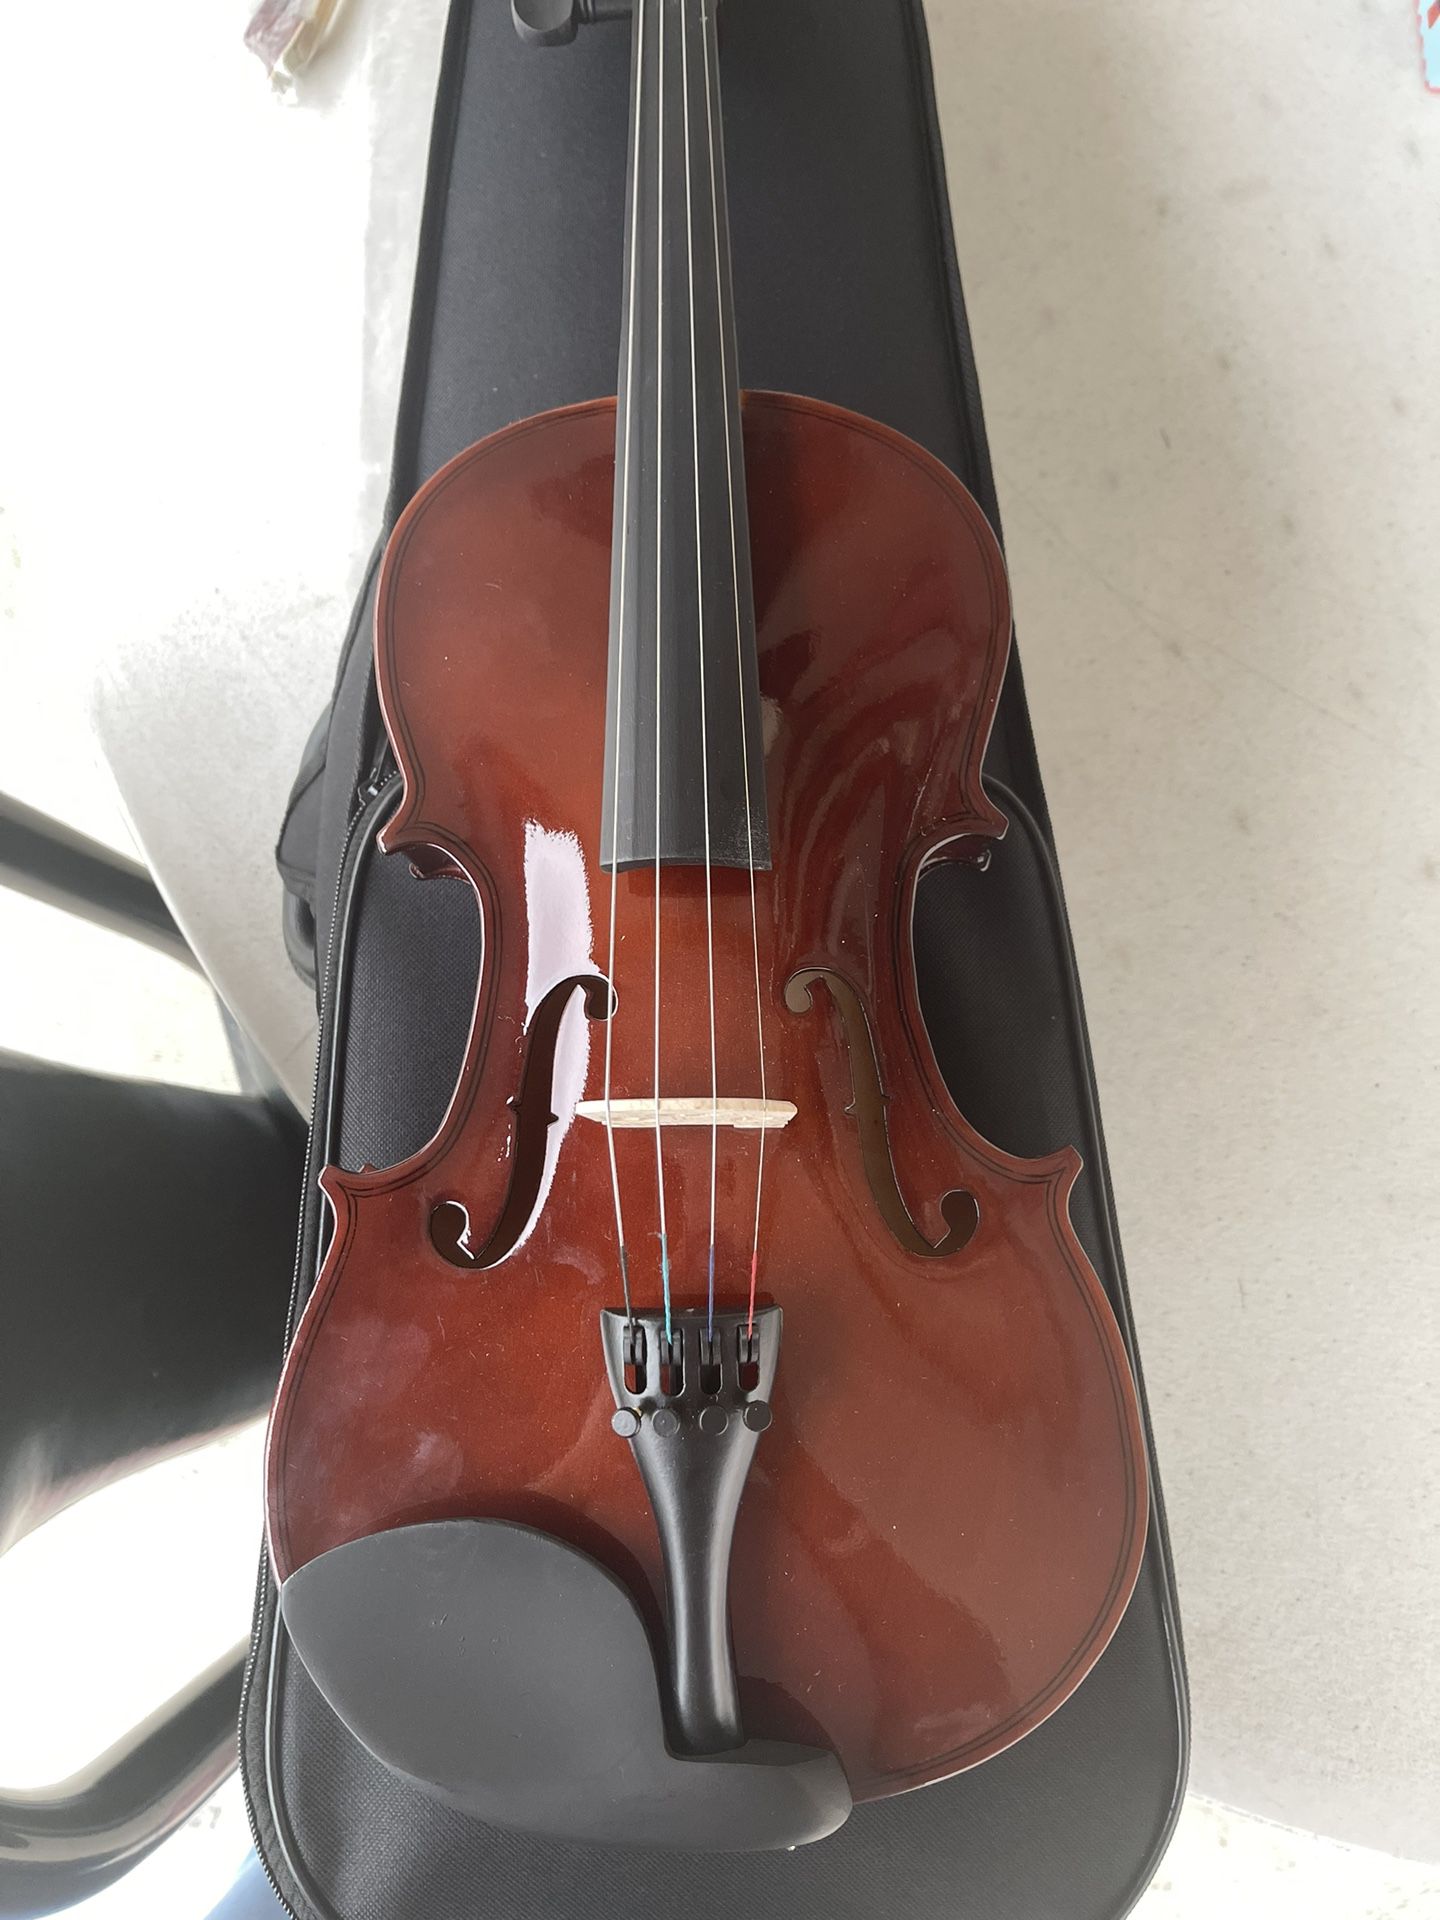 New Violin 🎻 $60